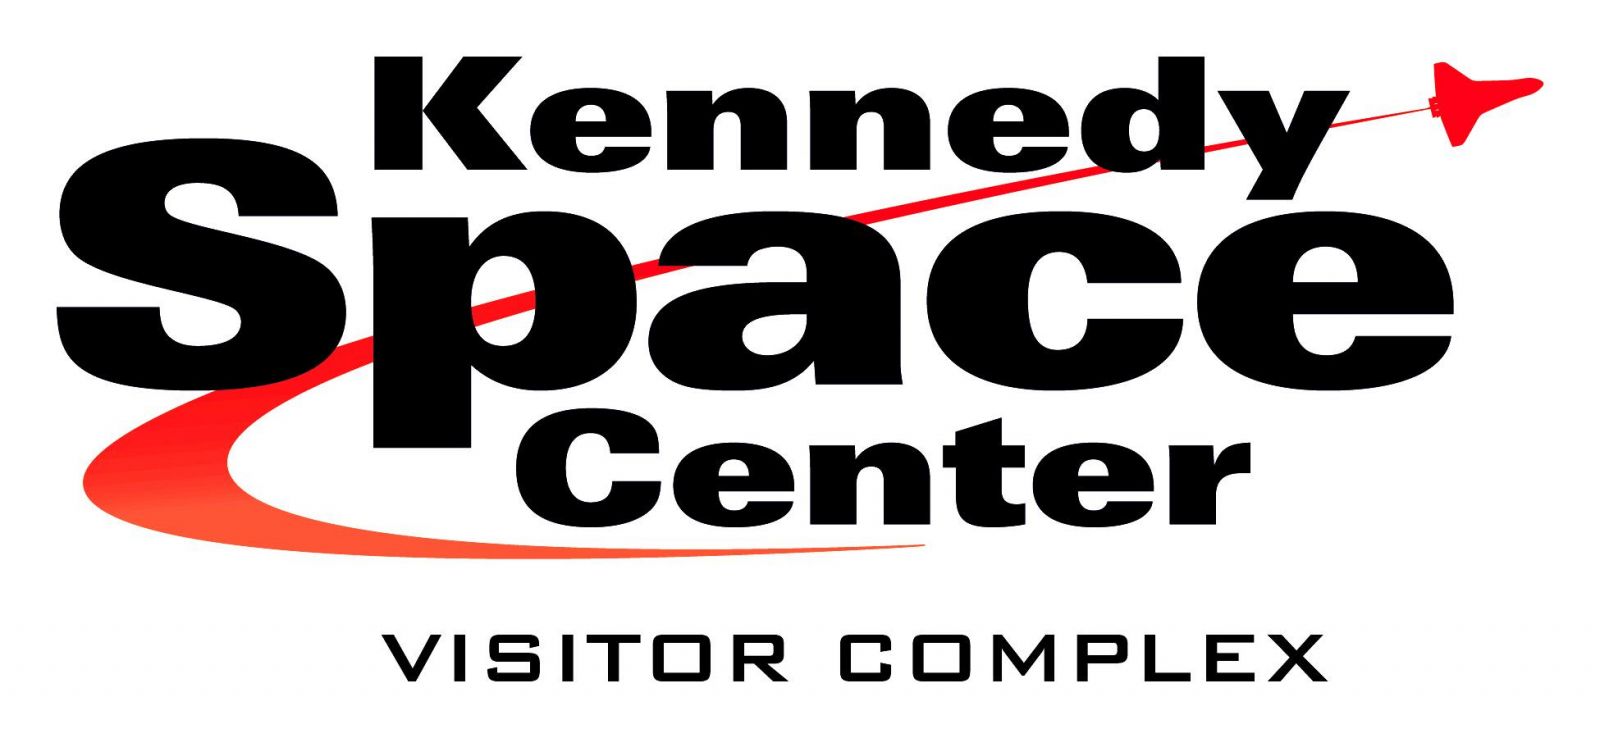 Kennedy Space Center Visitor Complex.jpg